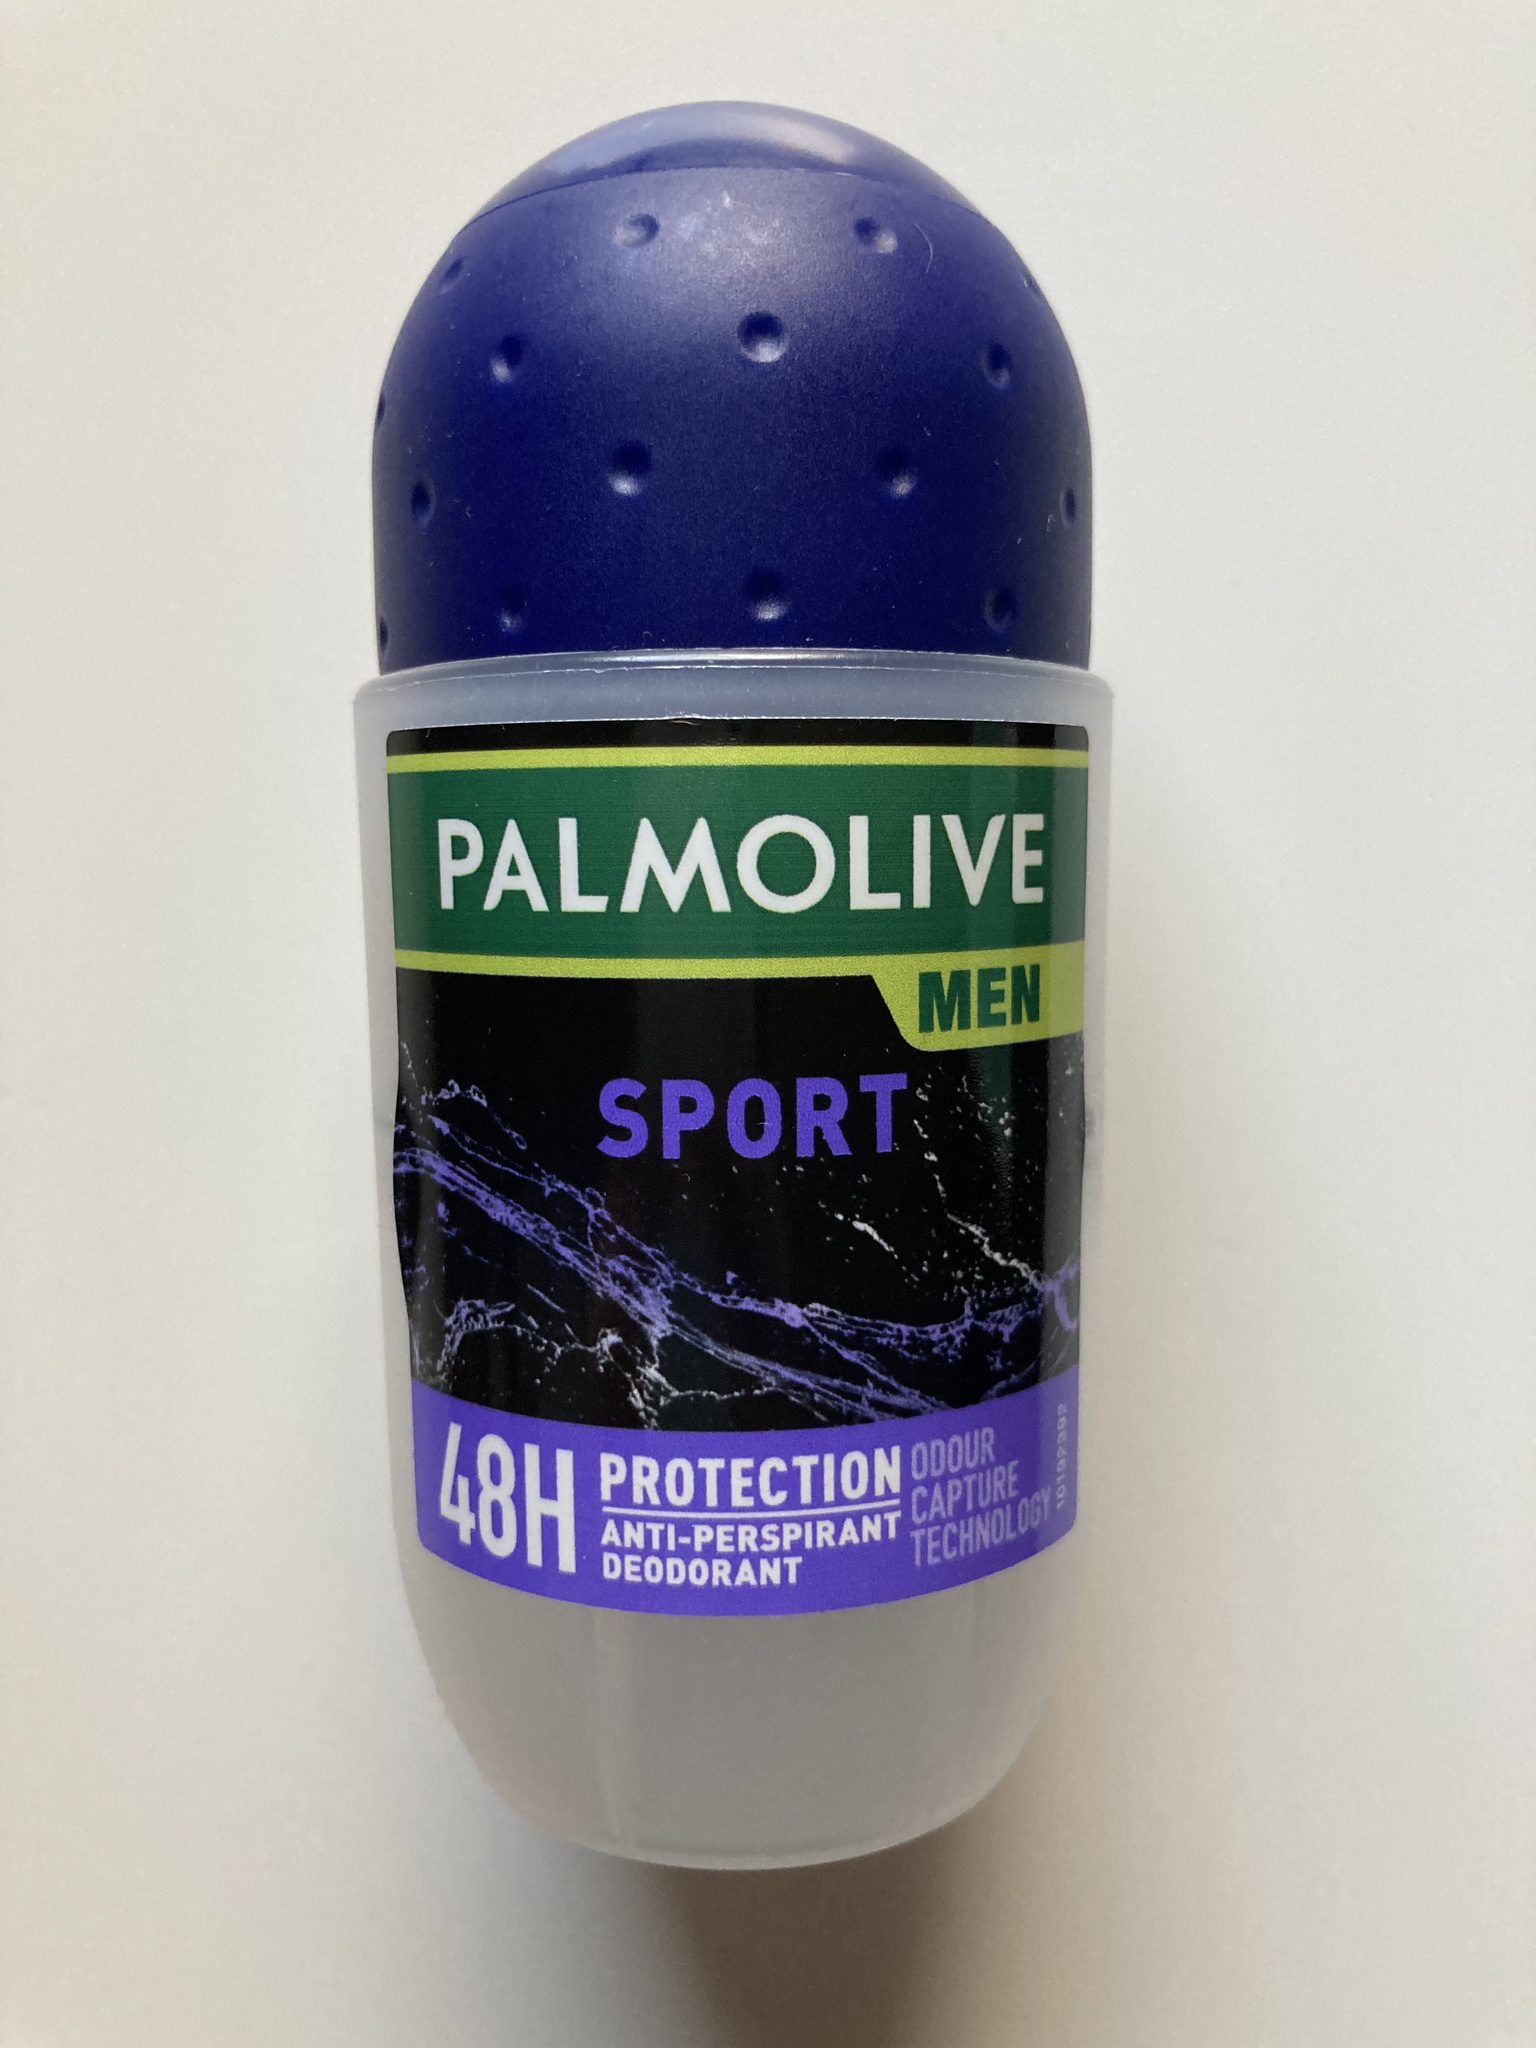 Palmolive Men Sport 48H Protection